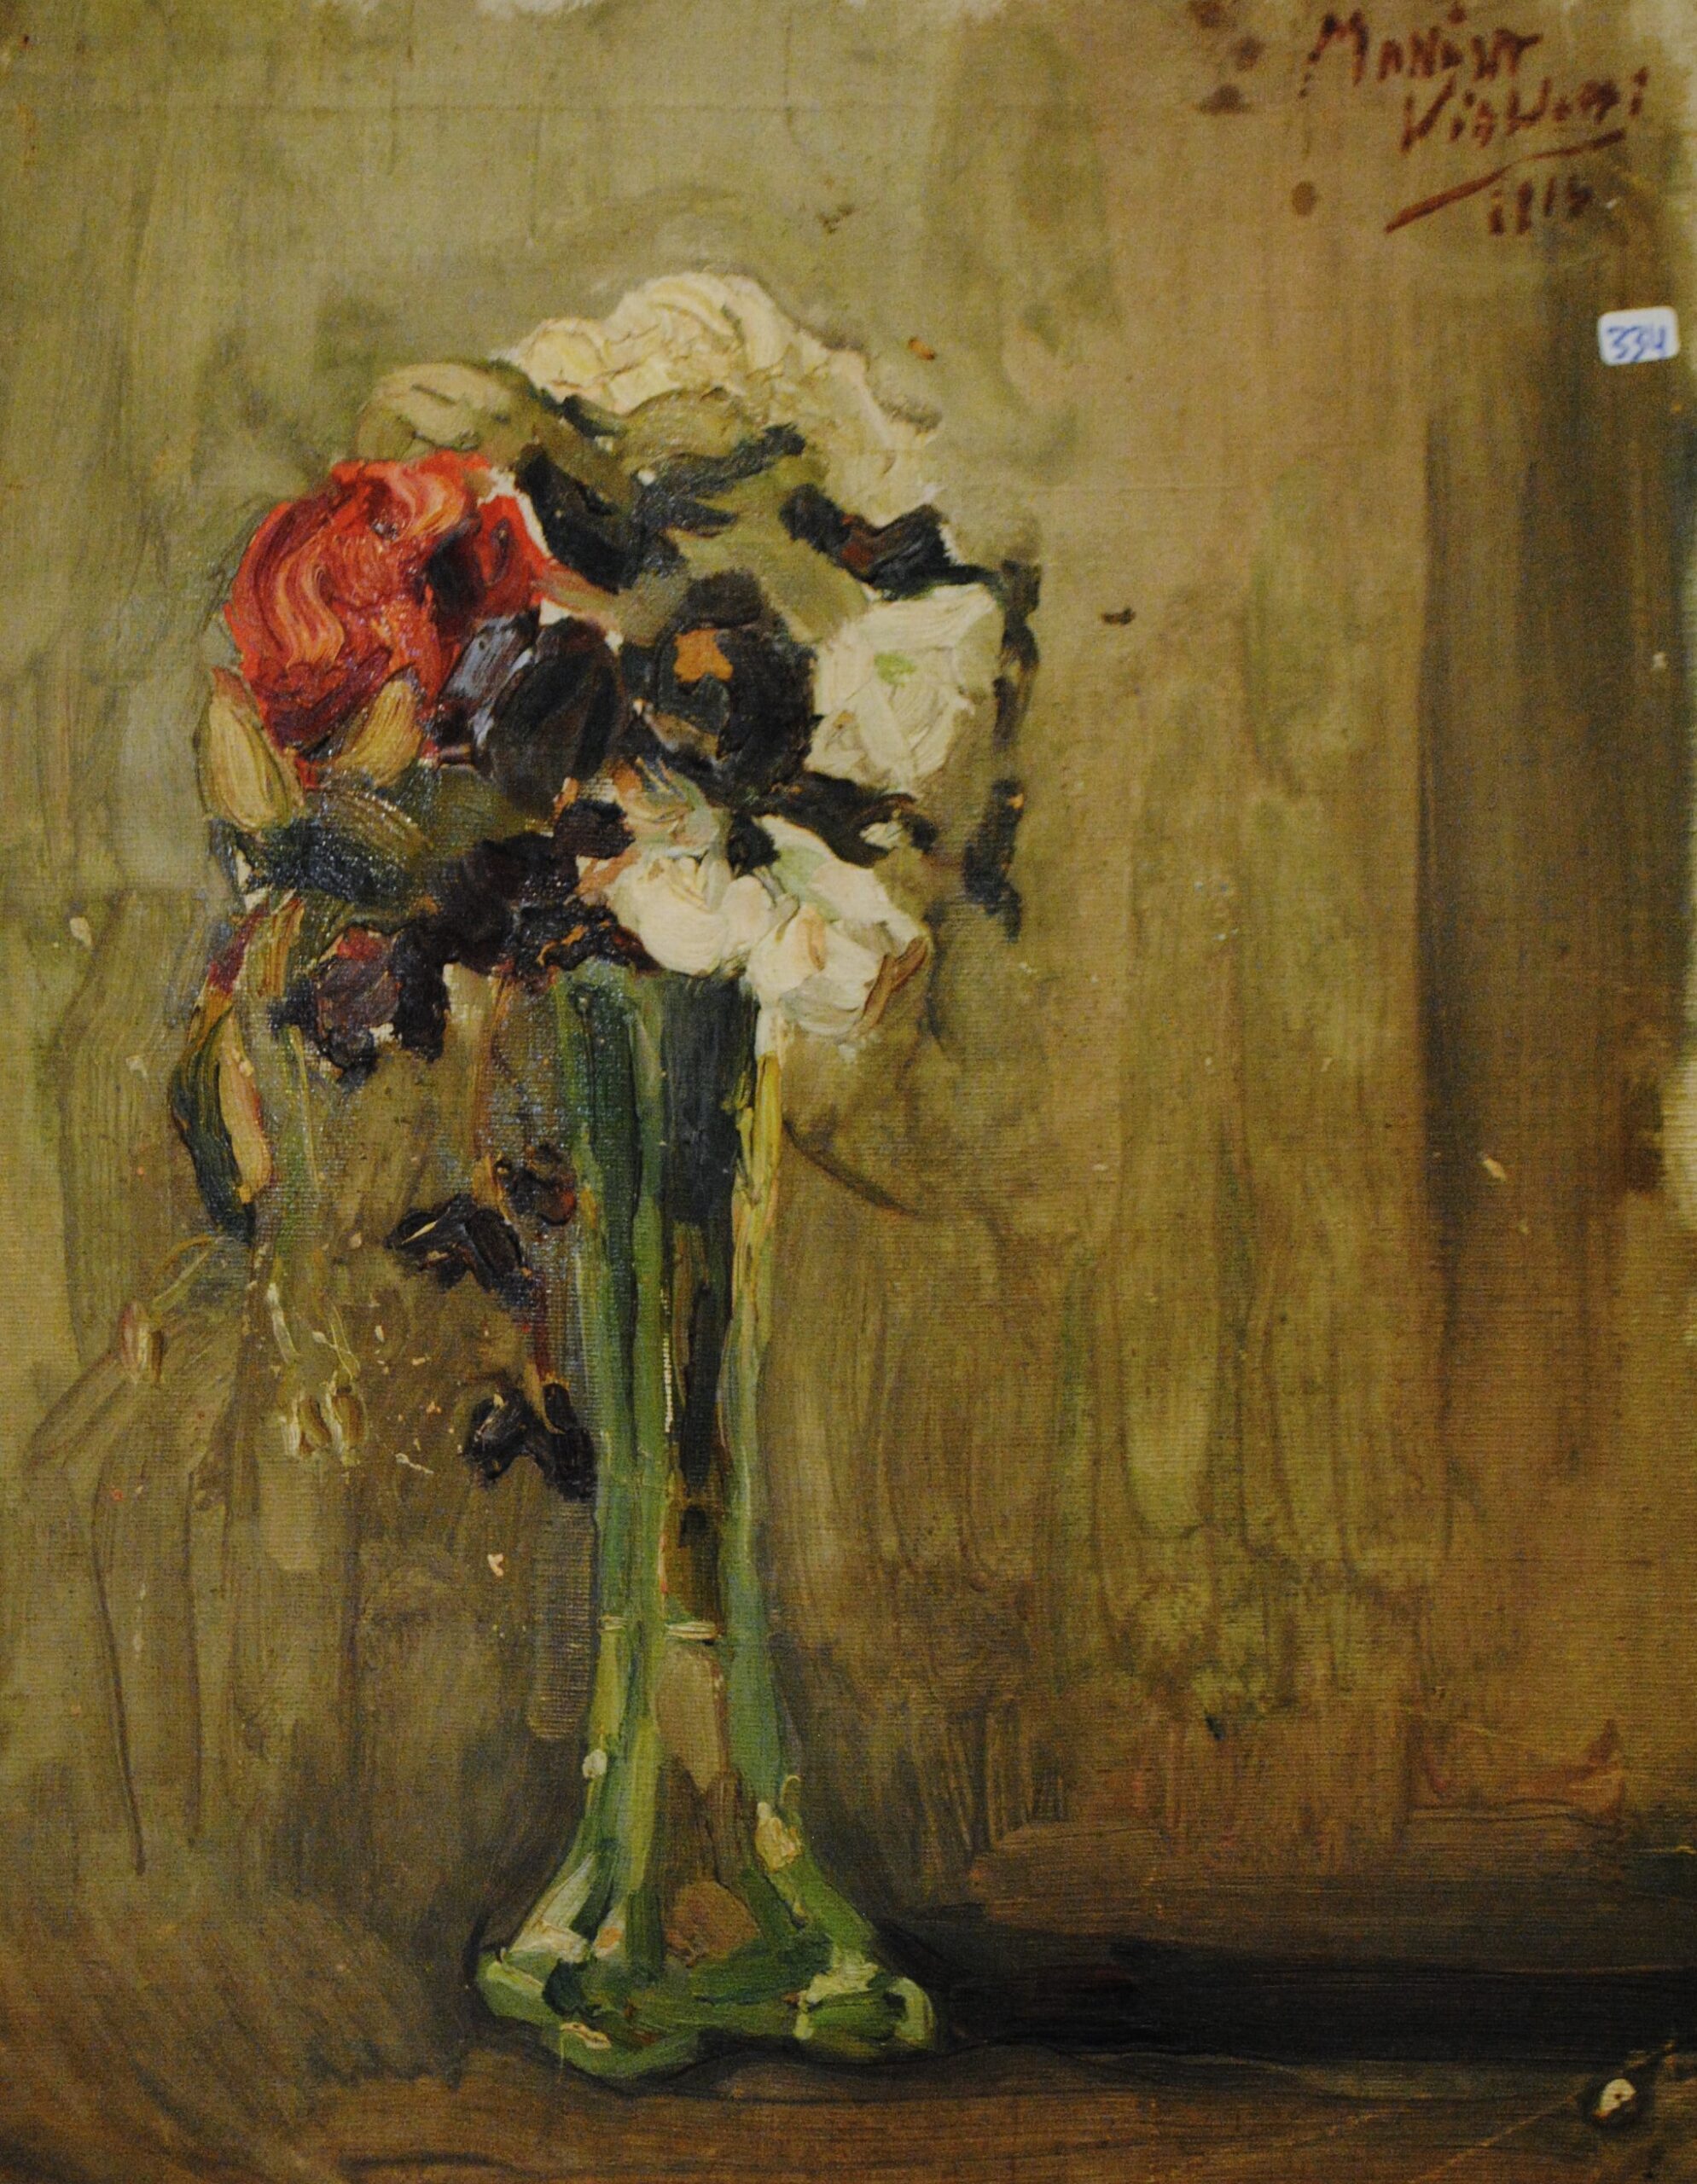 Pintura de José Manaut titulada Búcaro flores, 1914. Óleo sobre lienzo.